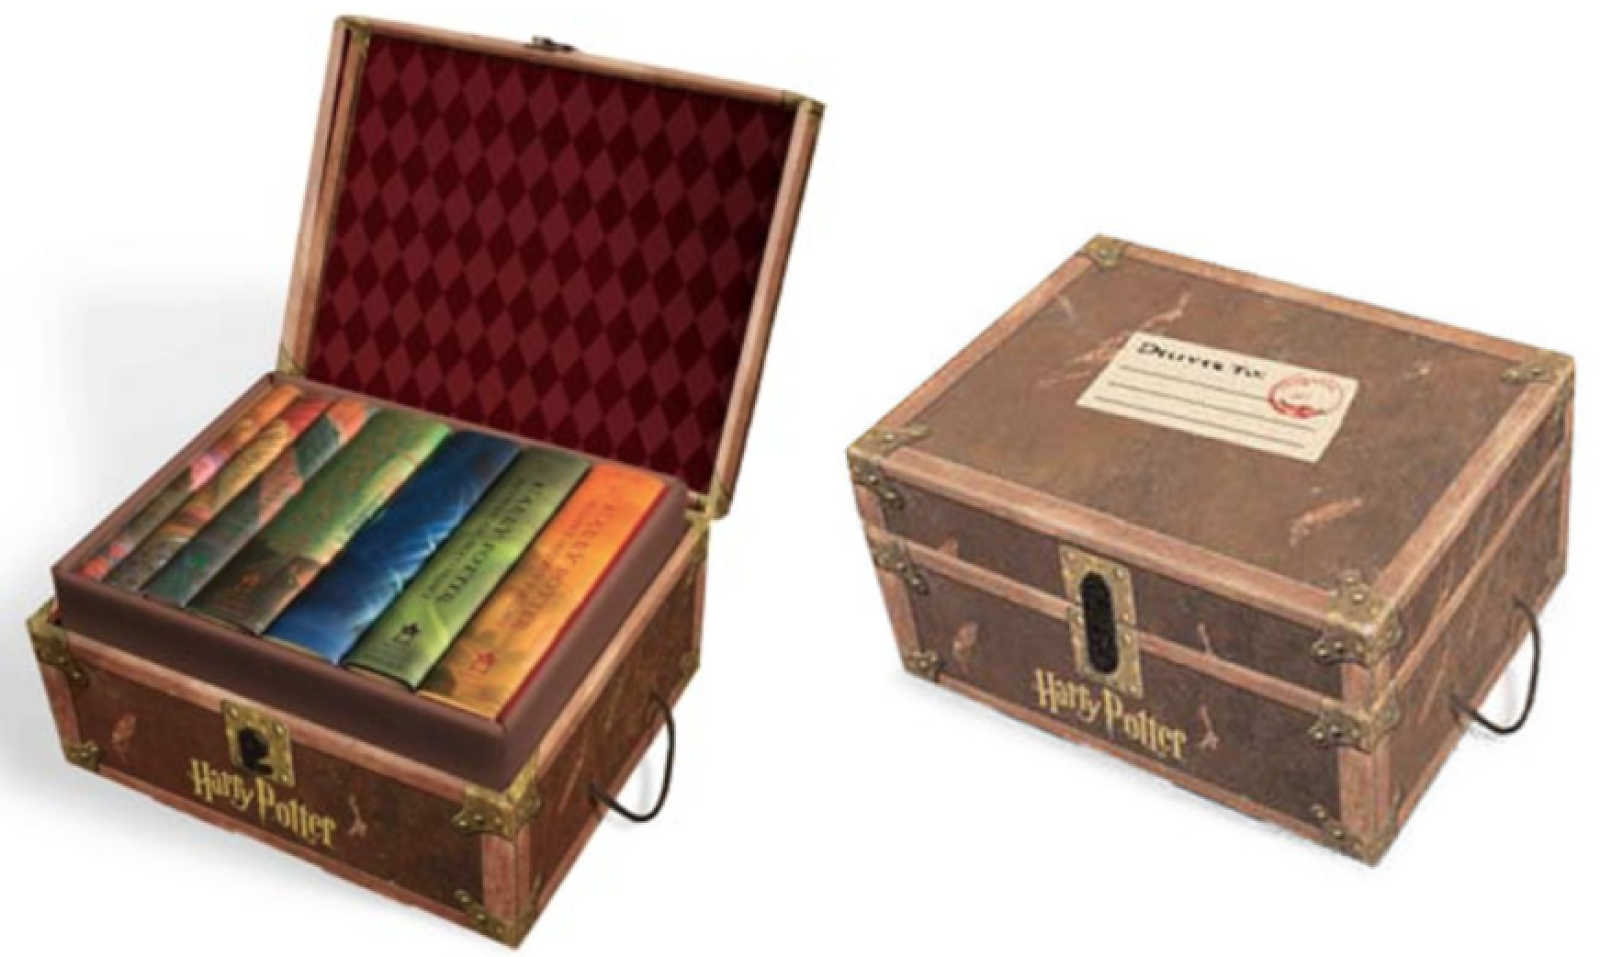 Harry Potter Hard Cover Boxed Set Books 1-7 Trunk Box 10/16/07 Original  Borders.